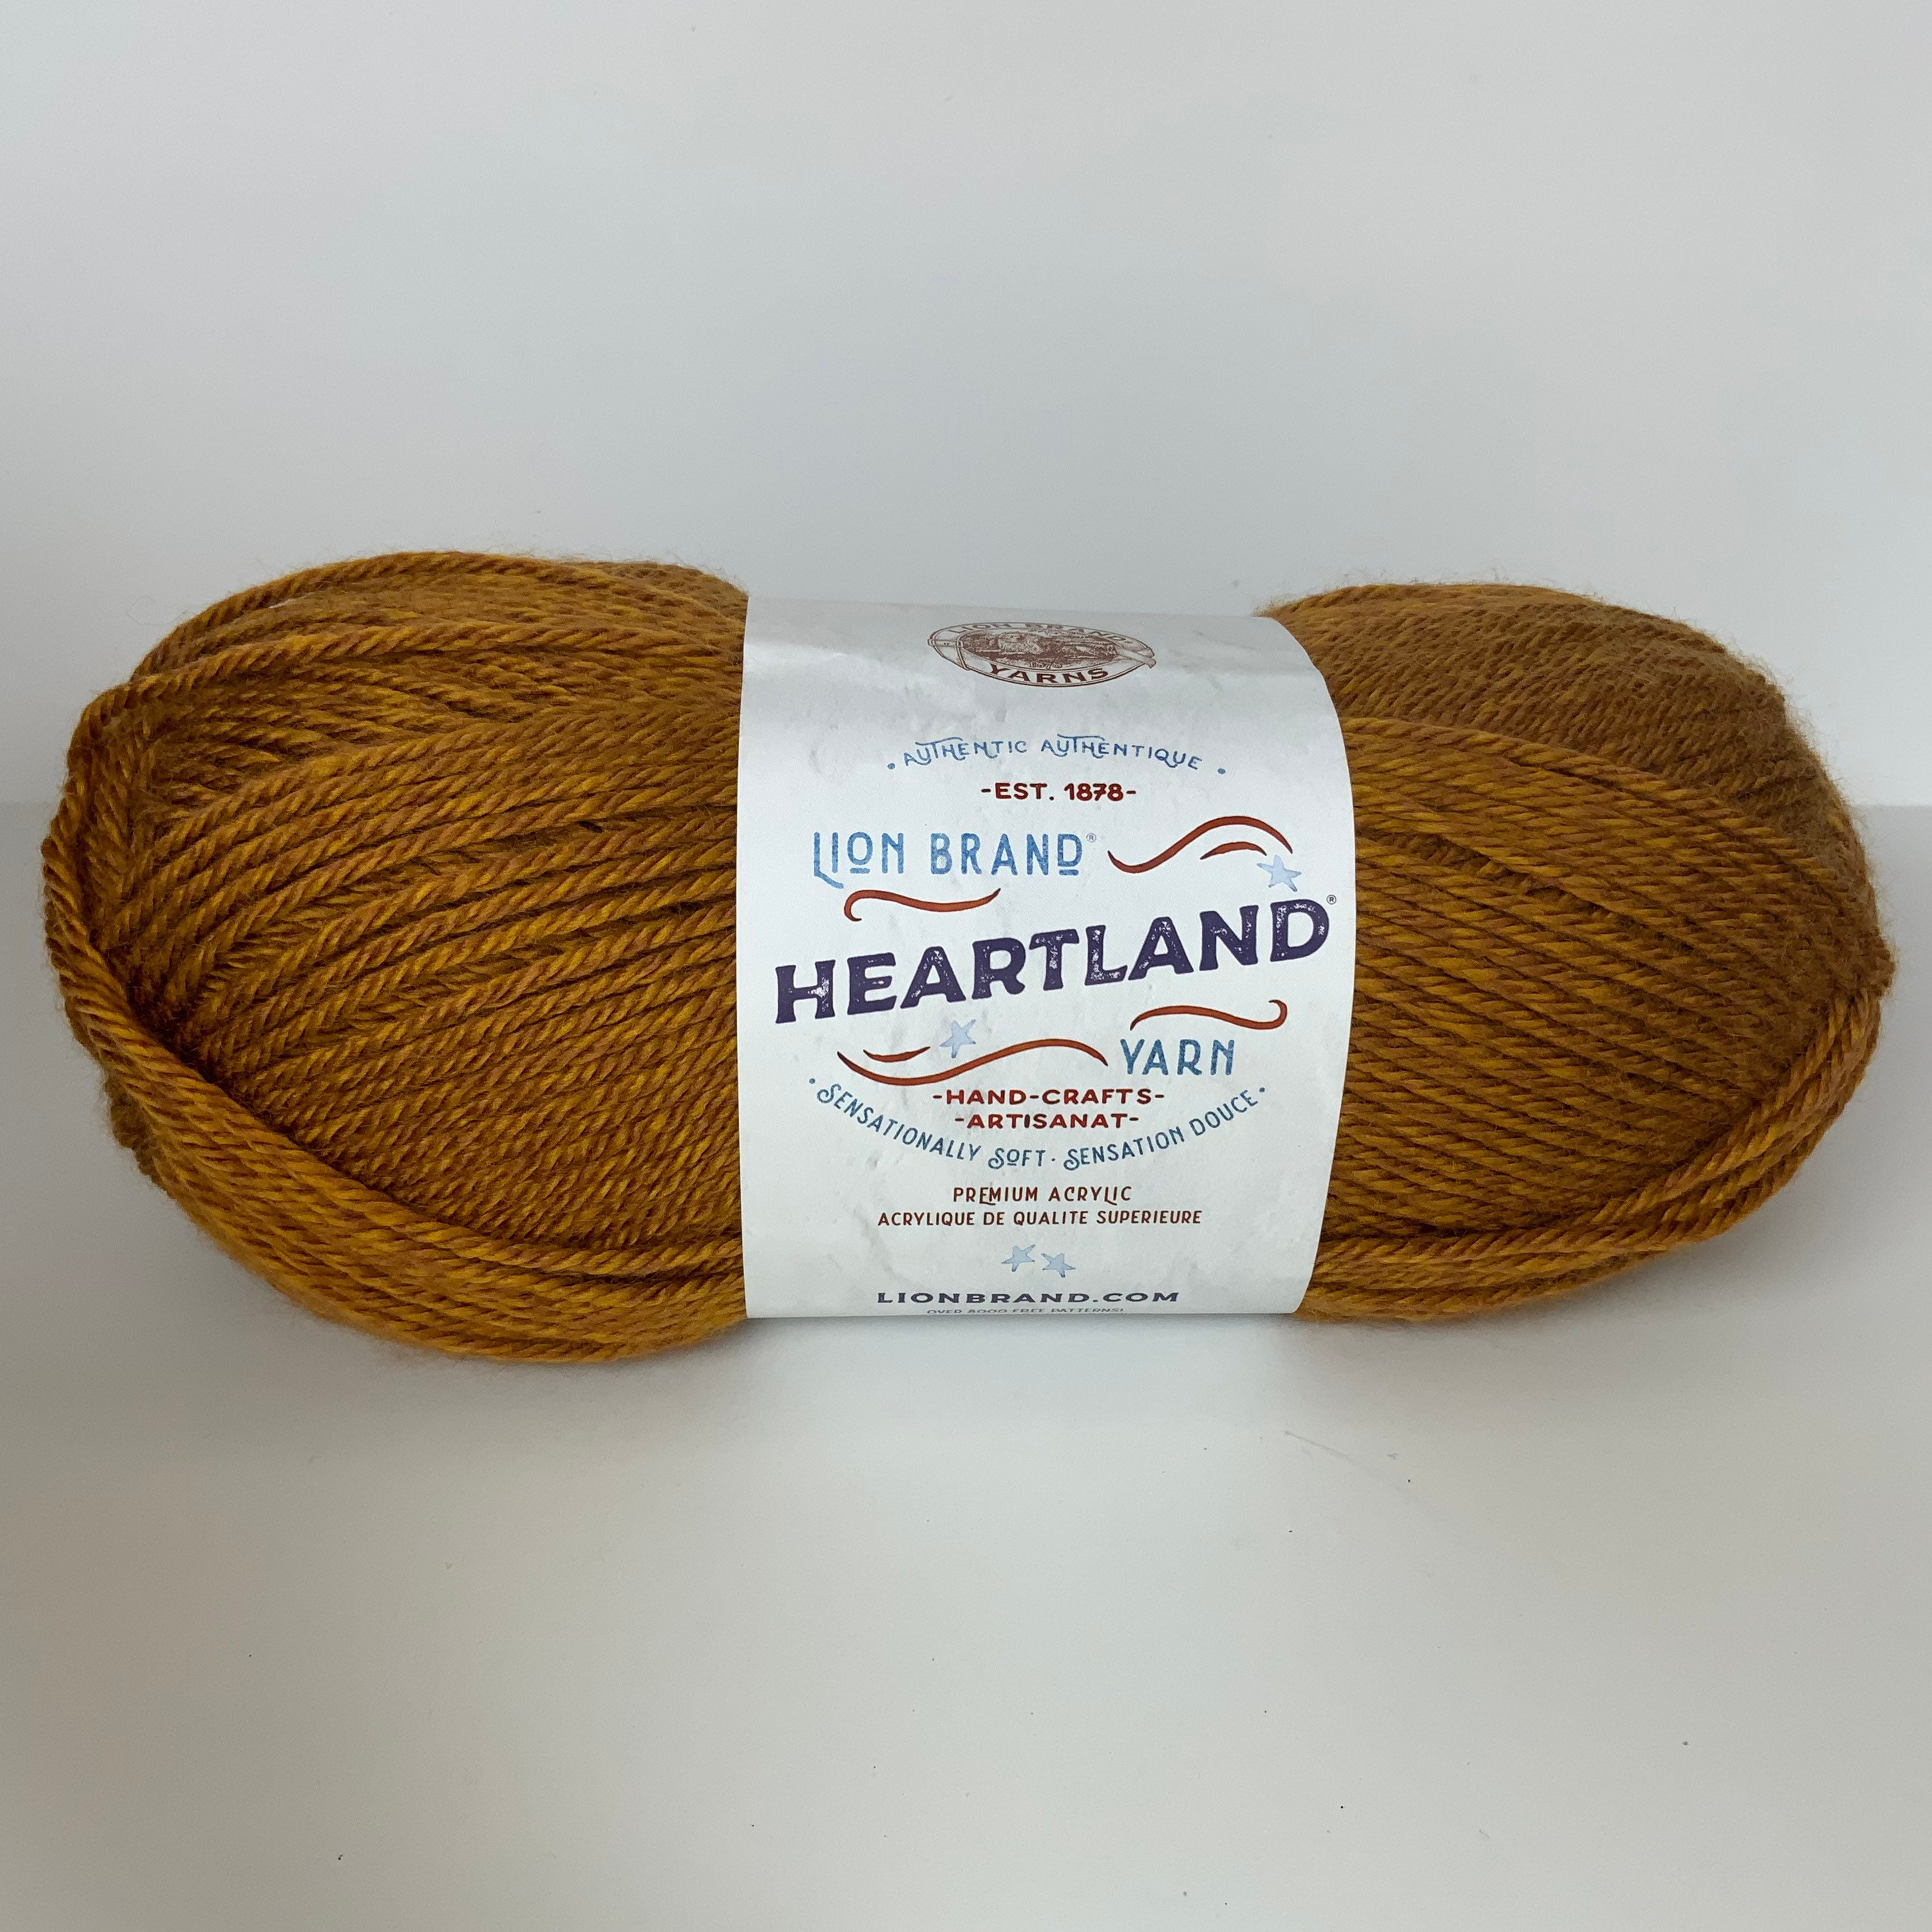 Lion Brand Yarn Heartland Yarn for Crocheting, Knitting, and Weaving,  Multicolor Yarn, 1-Pack, Voyageurs